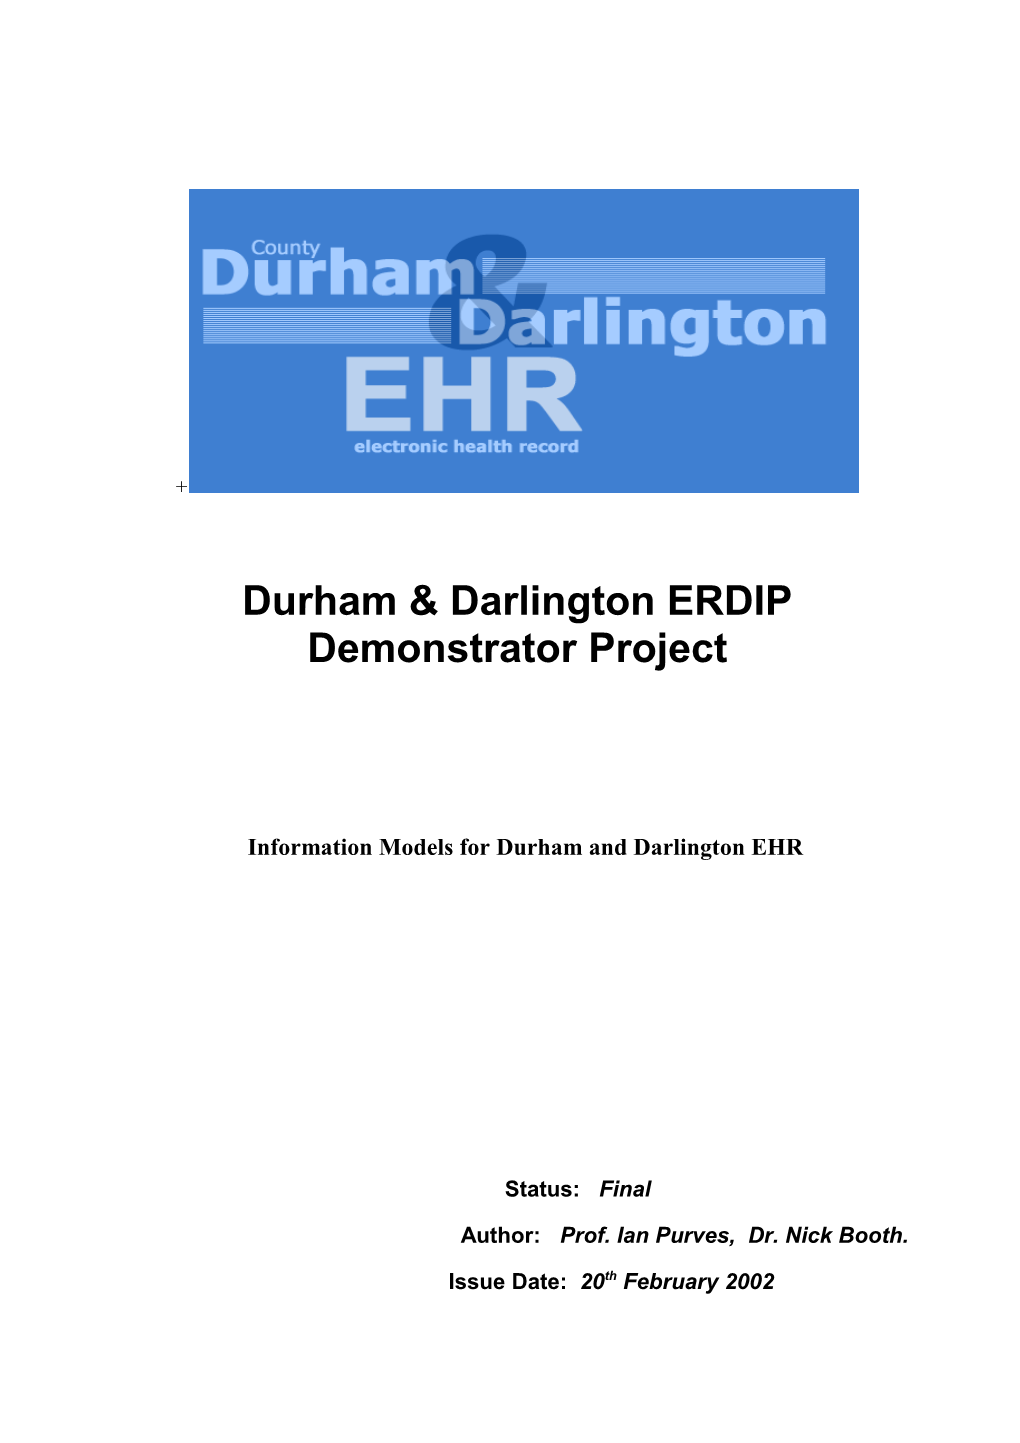 Durham and Darlington EHR Project - Information Models